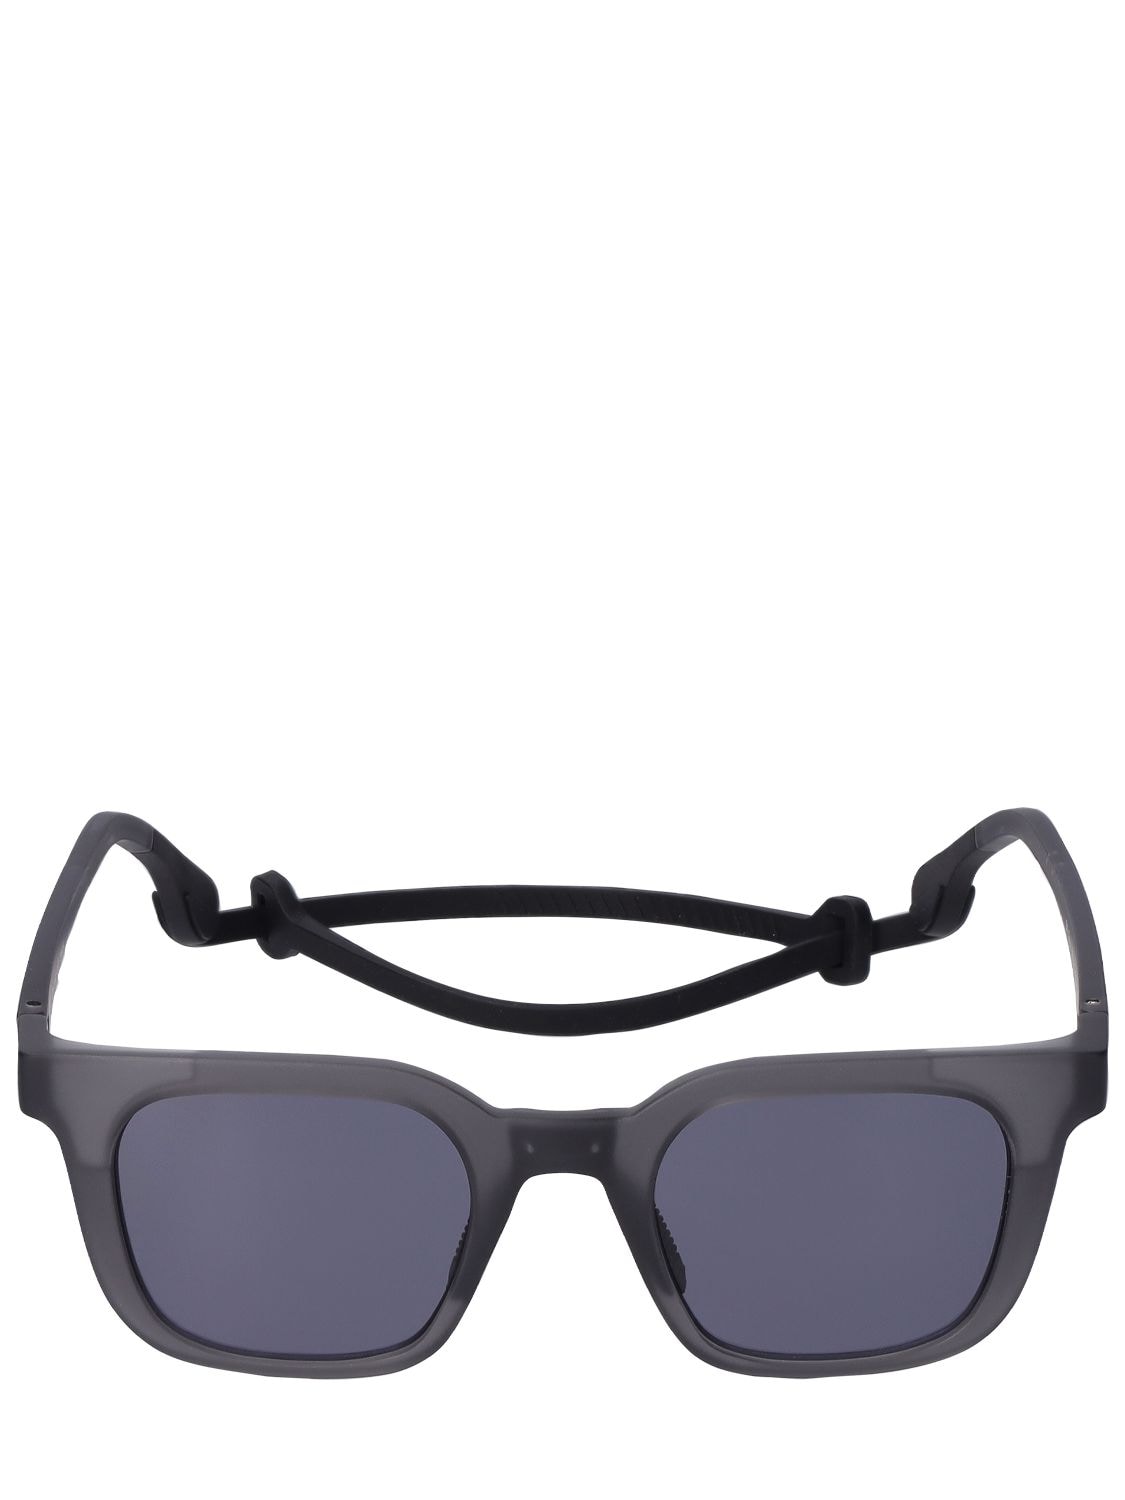 Chimi Active Grey Squared Sunglasses